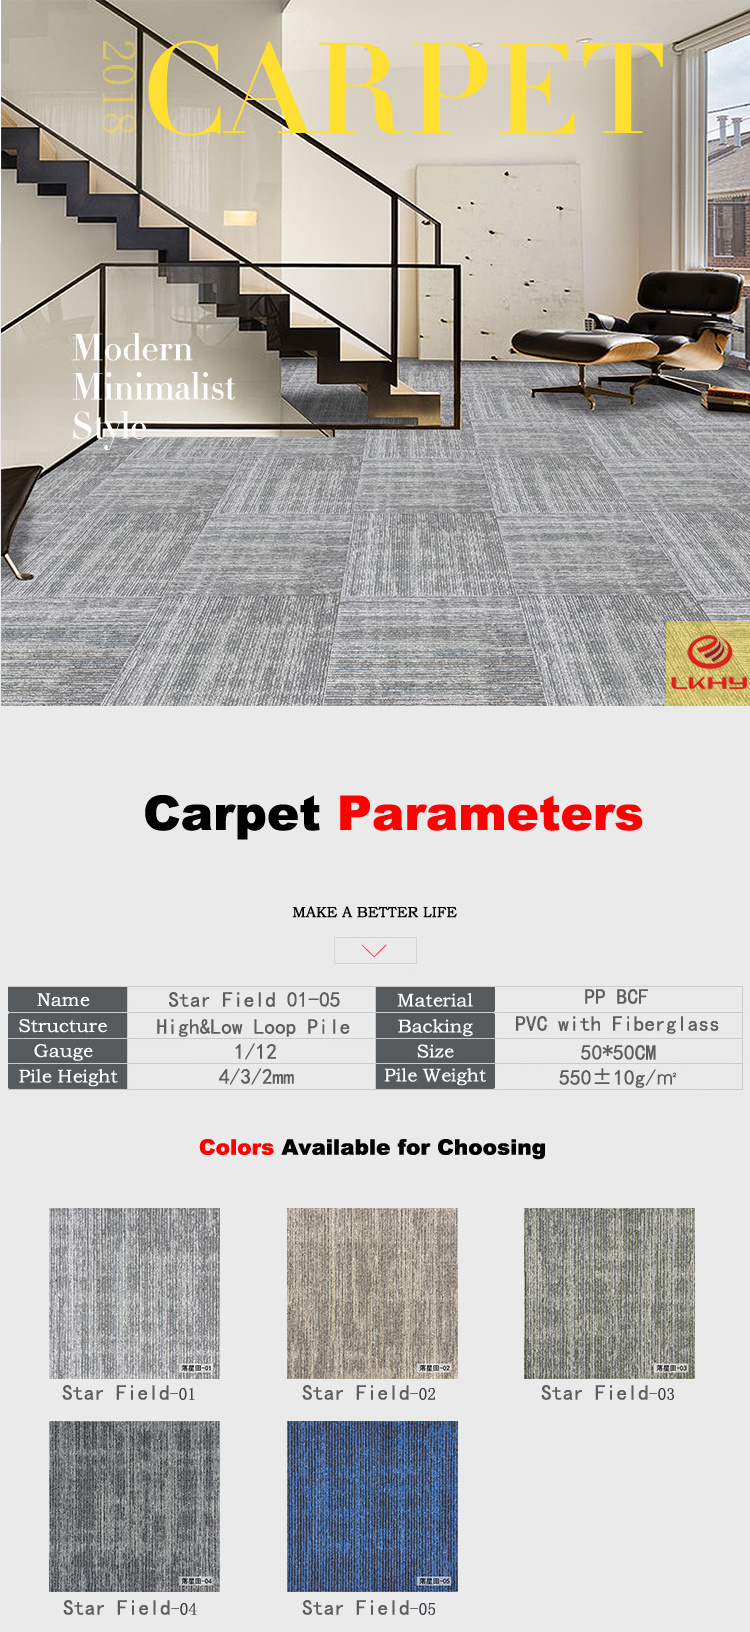 China Top 10 Carpet Brands PP Washable Anti Slip Flooring Carpet_Tiles for Home